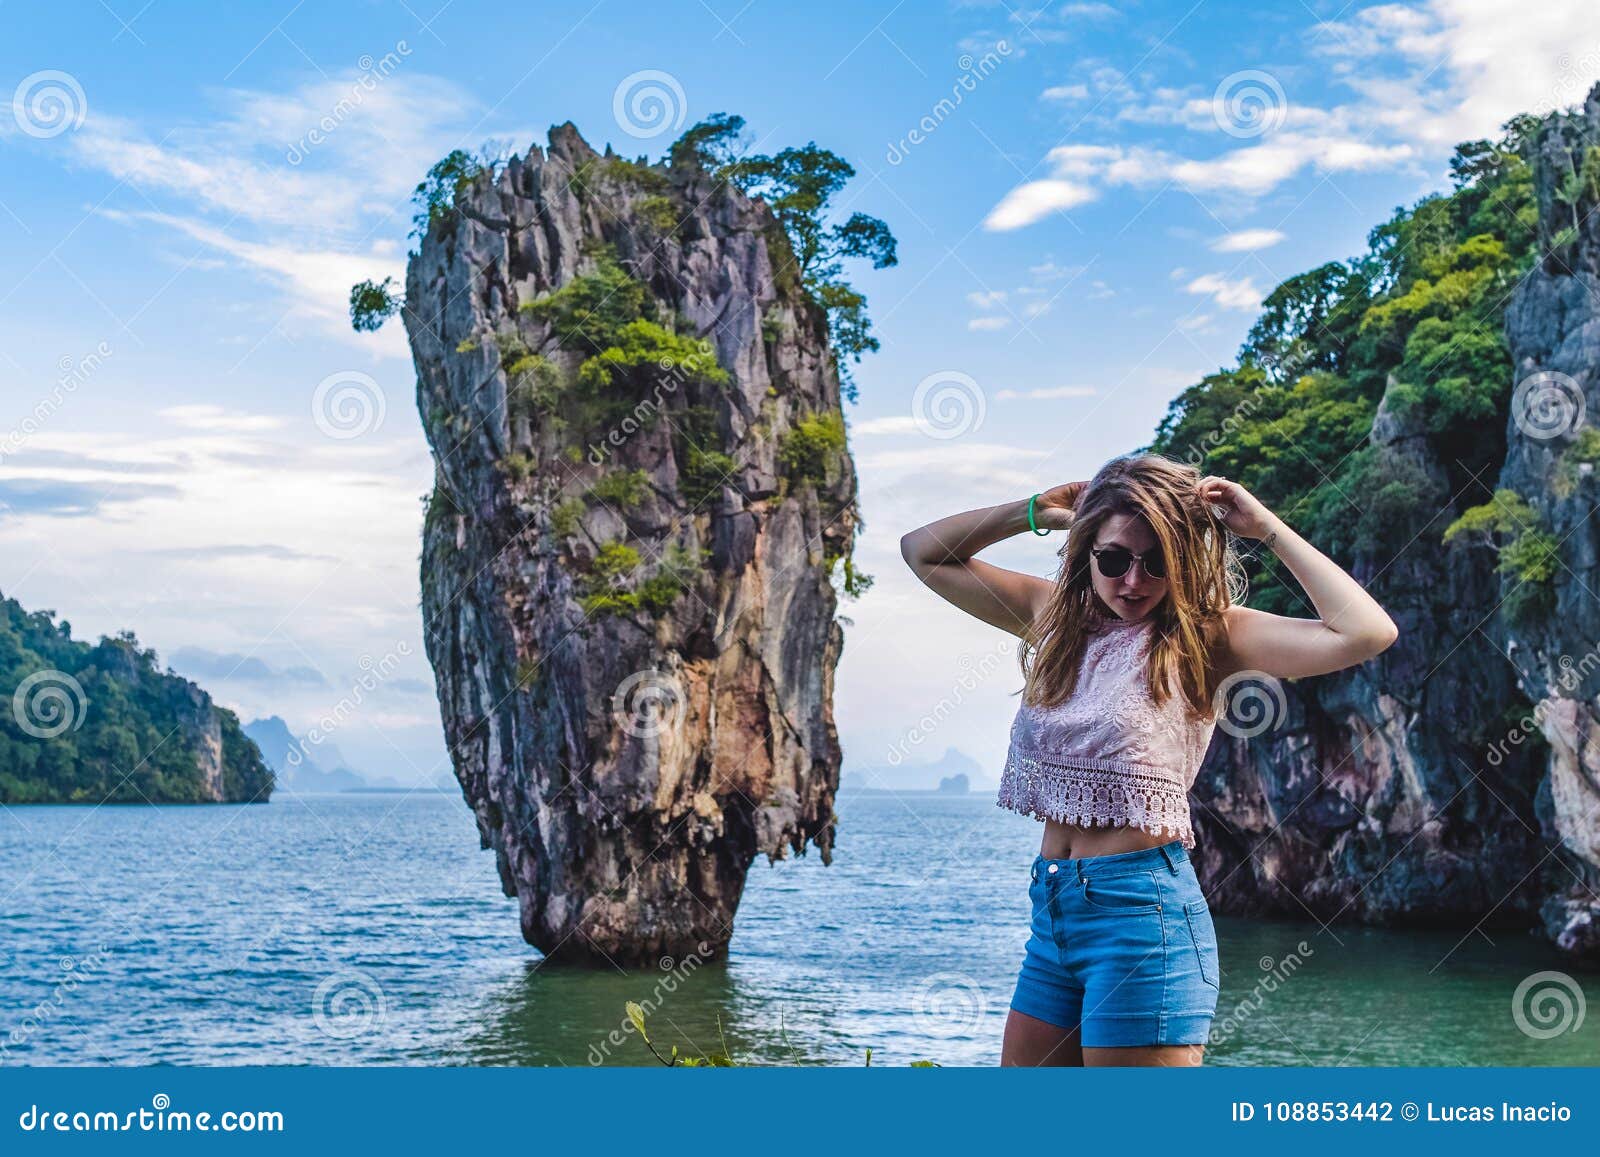 James Bond Island in Phang Nga Bay, Thailand Stock Photo - Image of ...